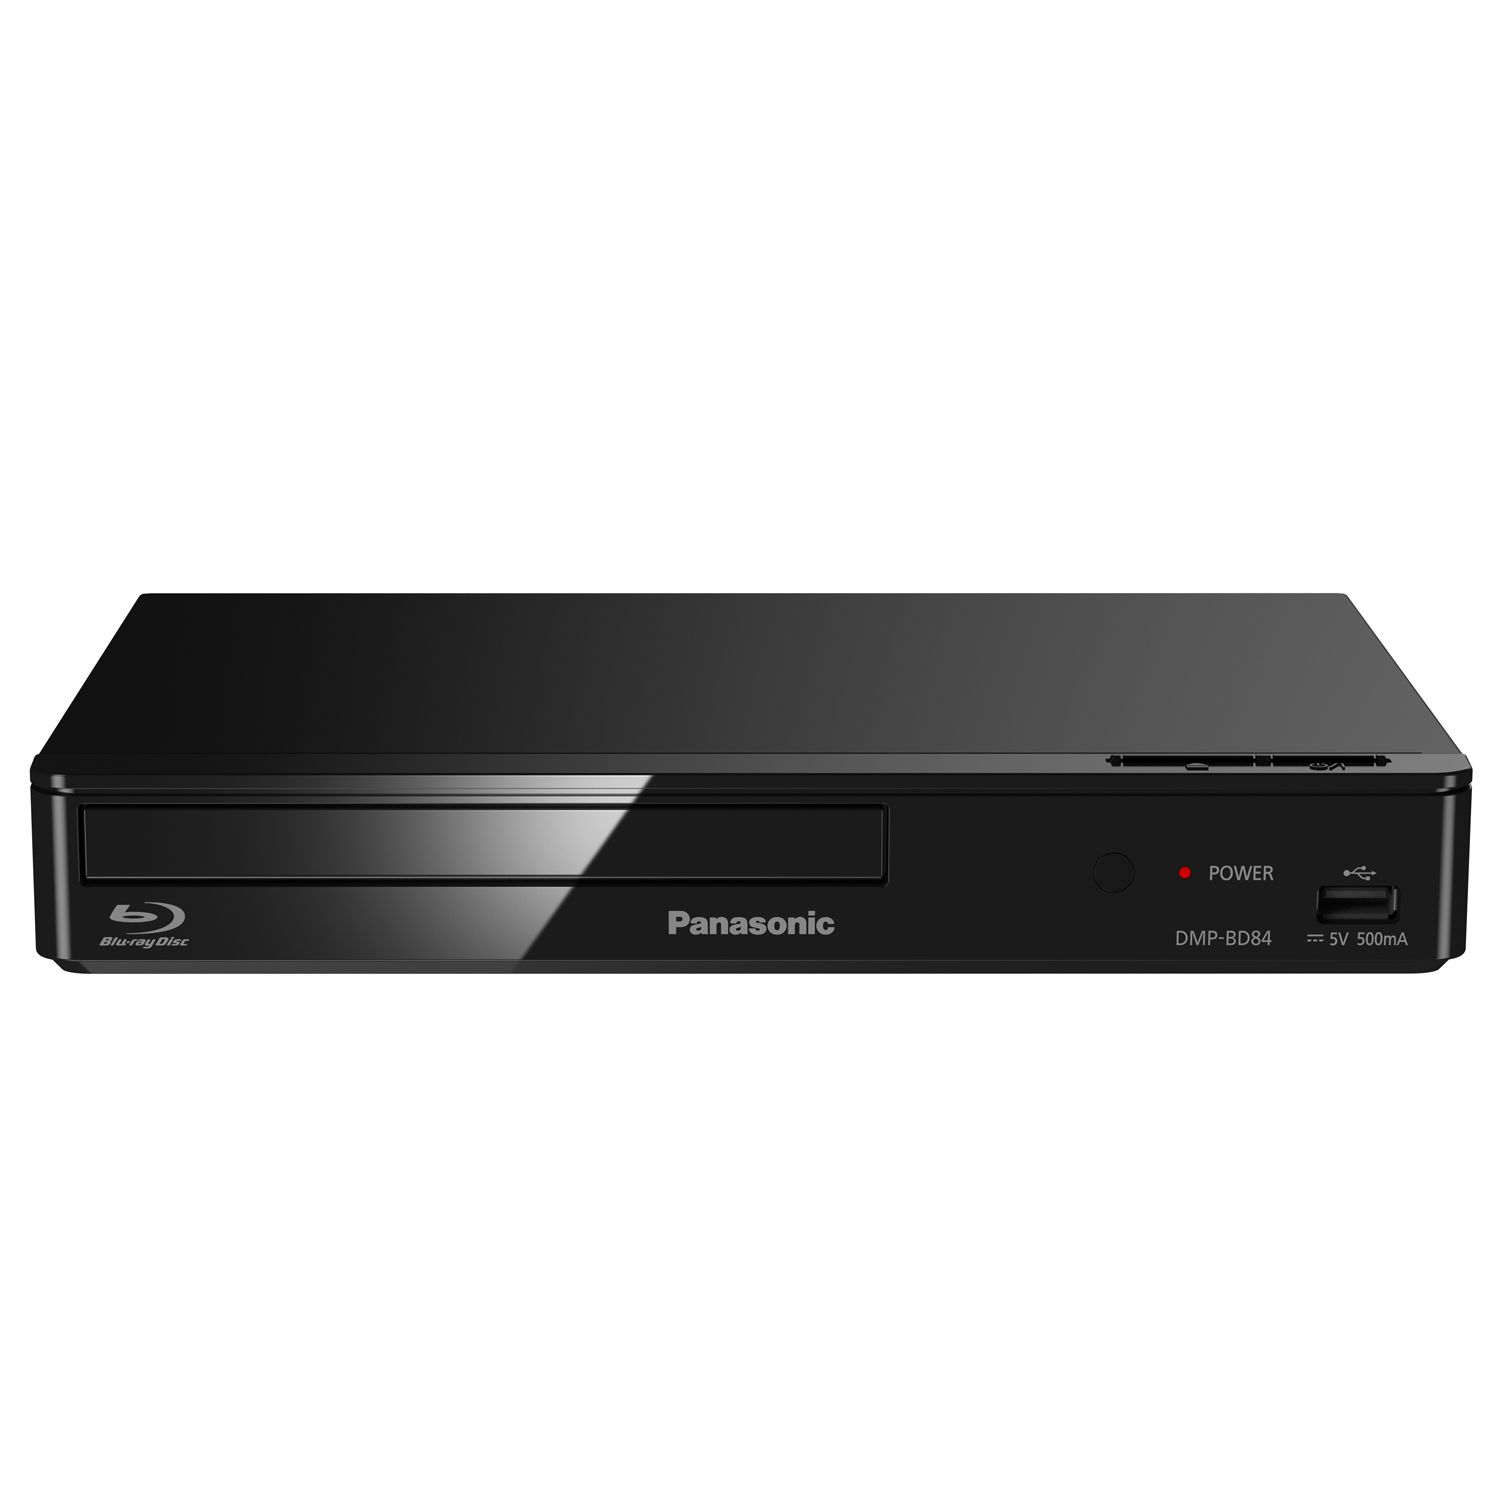 Panasonic DP-UB820 Region free Blu-ray Player UHD Ultra HD 4K